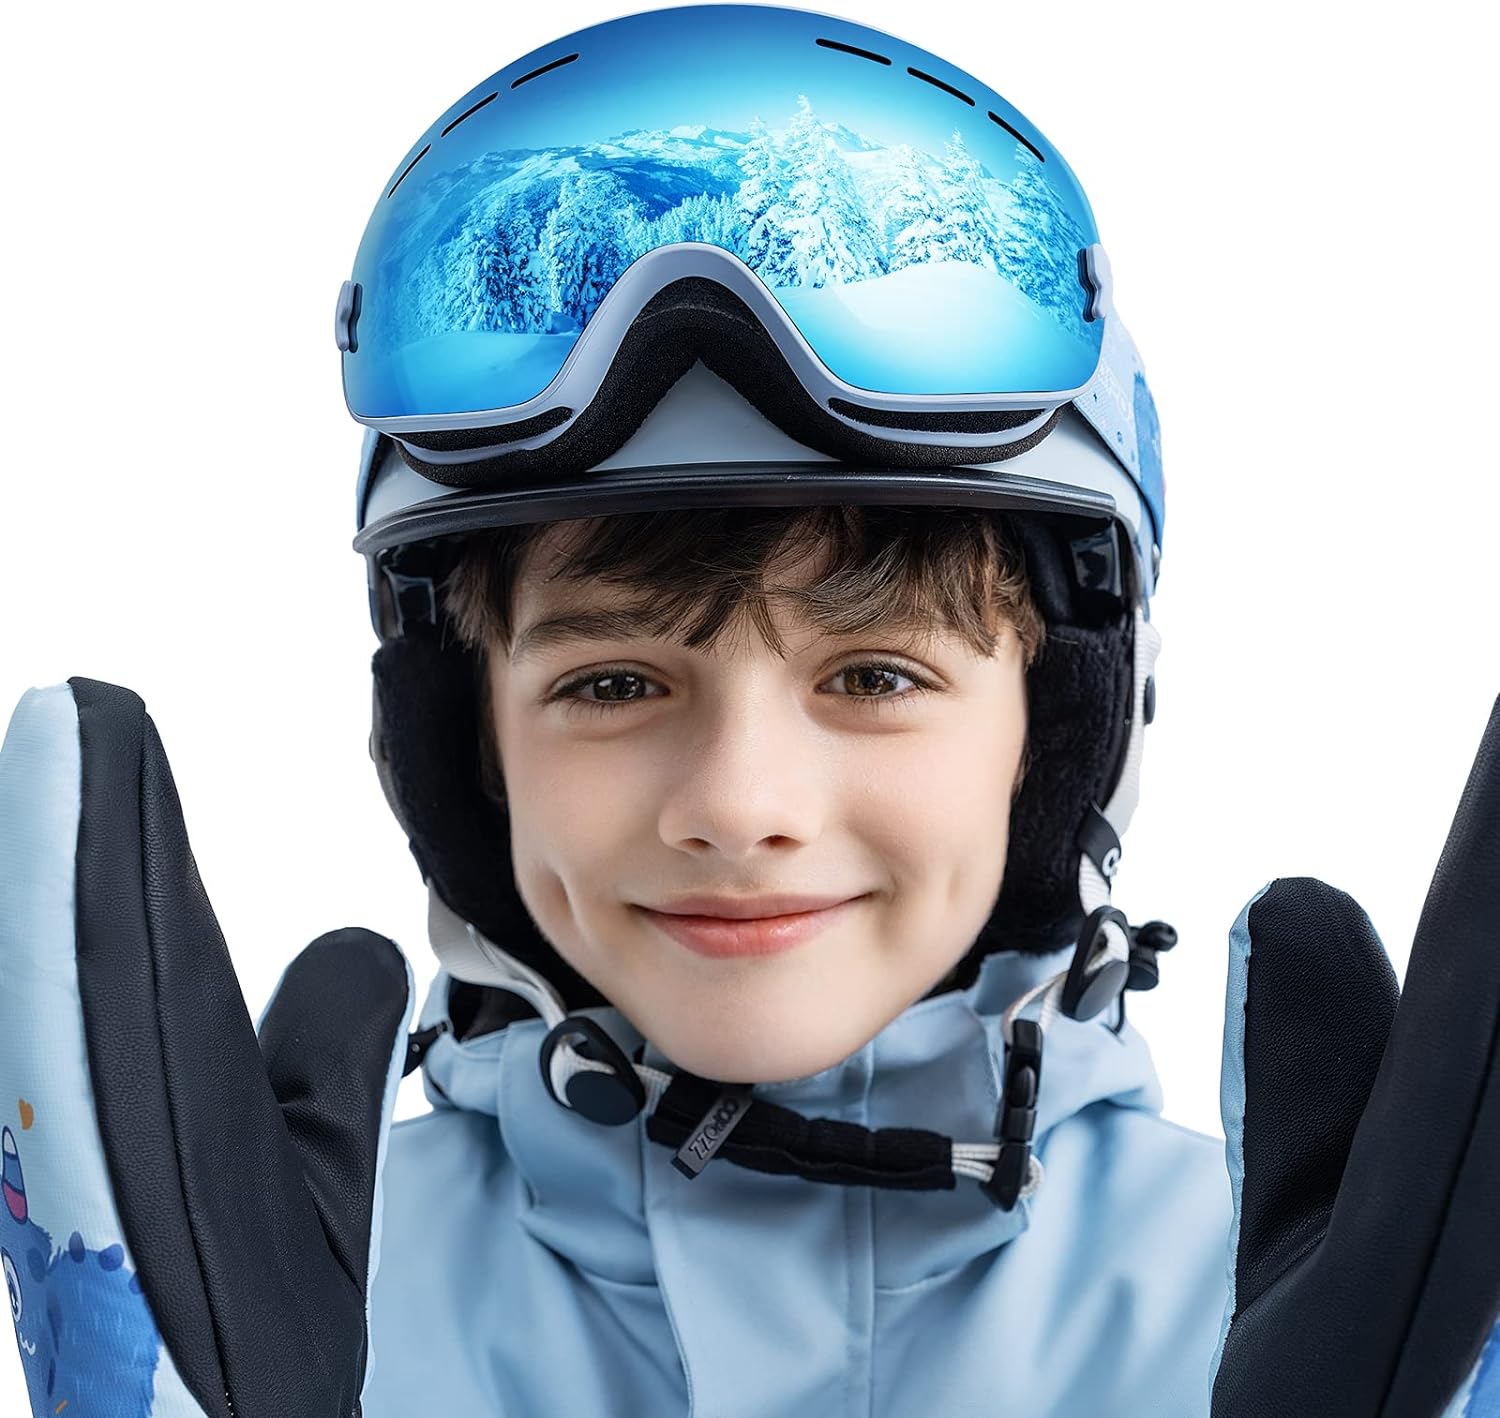 COPOZZ Ski Goggles Kids, Youth Snowboard Goggles for Boys Girls Toddler Age 2-12,OTG UV400 Helmet Compatible Skiing Equipment